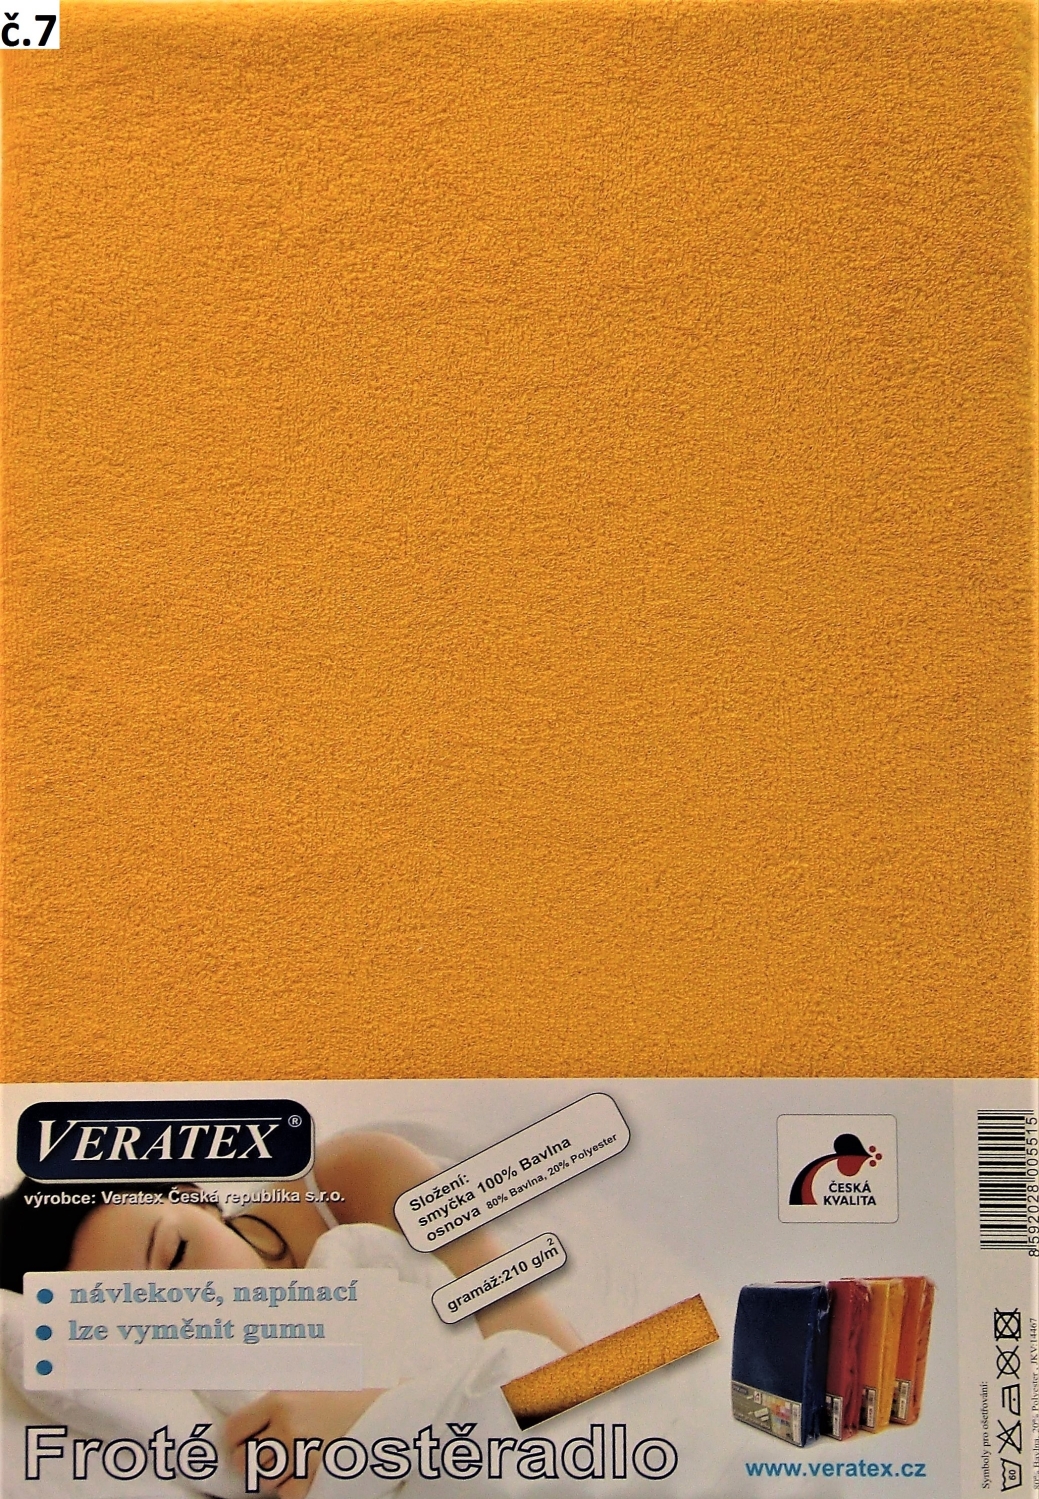 Veratex Froté prostěradlo 200 x 240 cm (č. 7-sytě žlutá) 200 x 240 cm